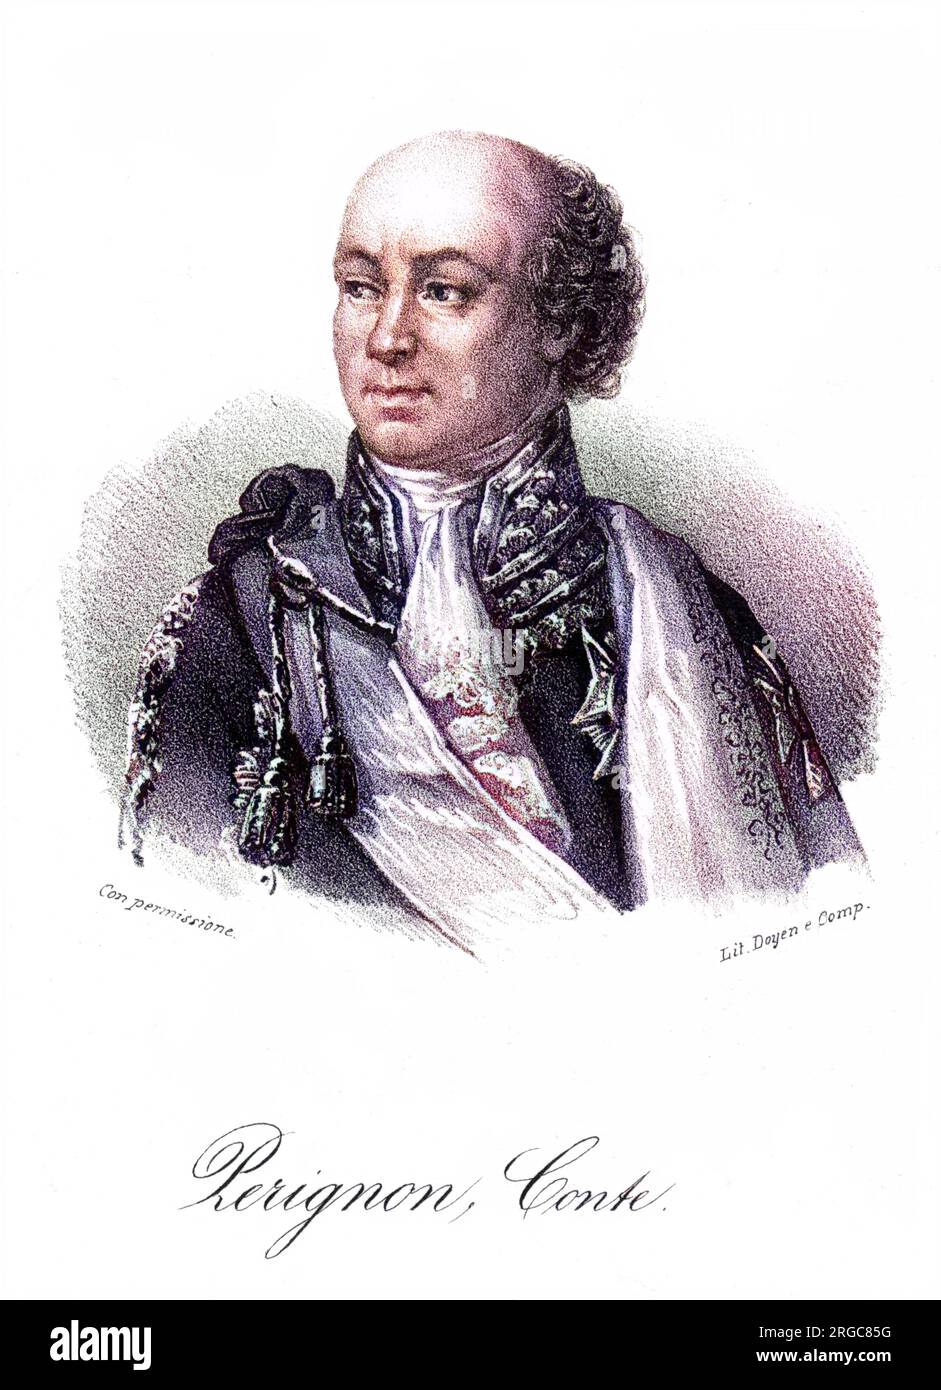 DOMINIQUE-CATHERINE marquis et comte de PERIGNON, französischer Militärbefehlshaber, marechal de France Stockfoto